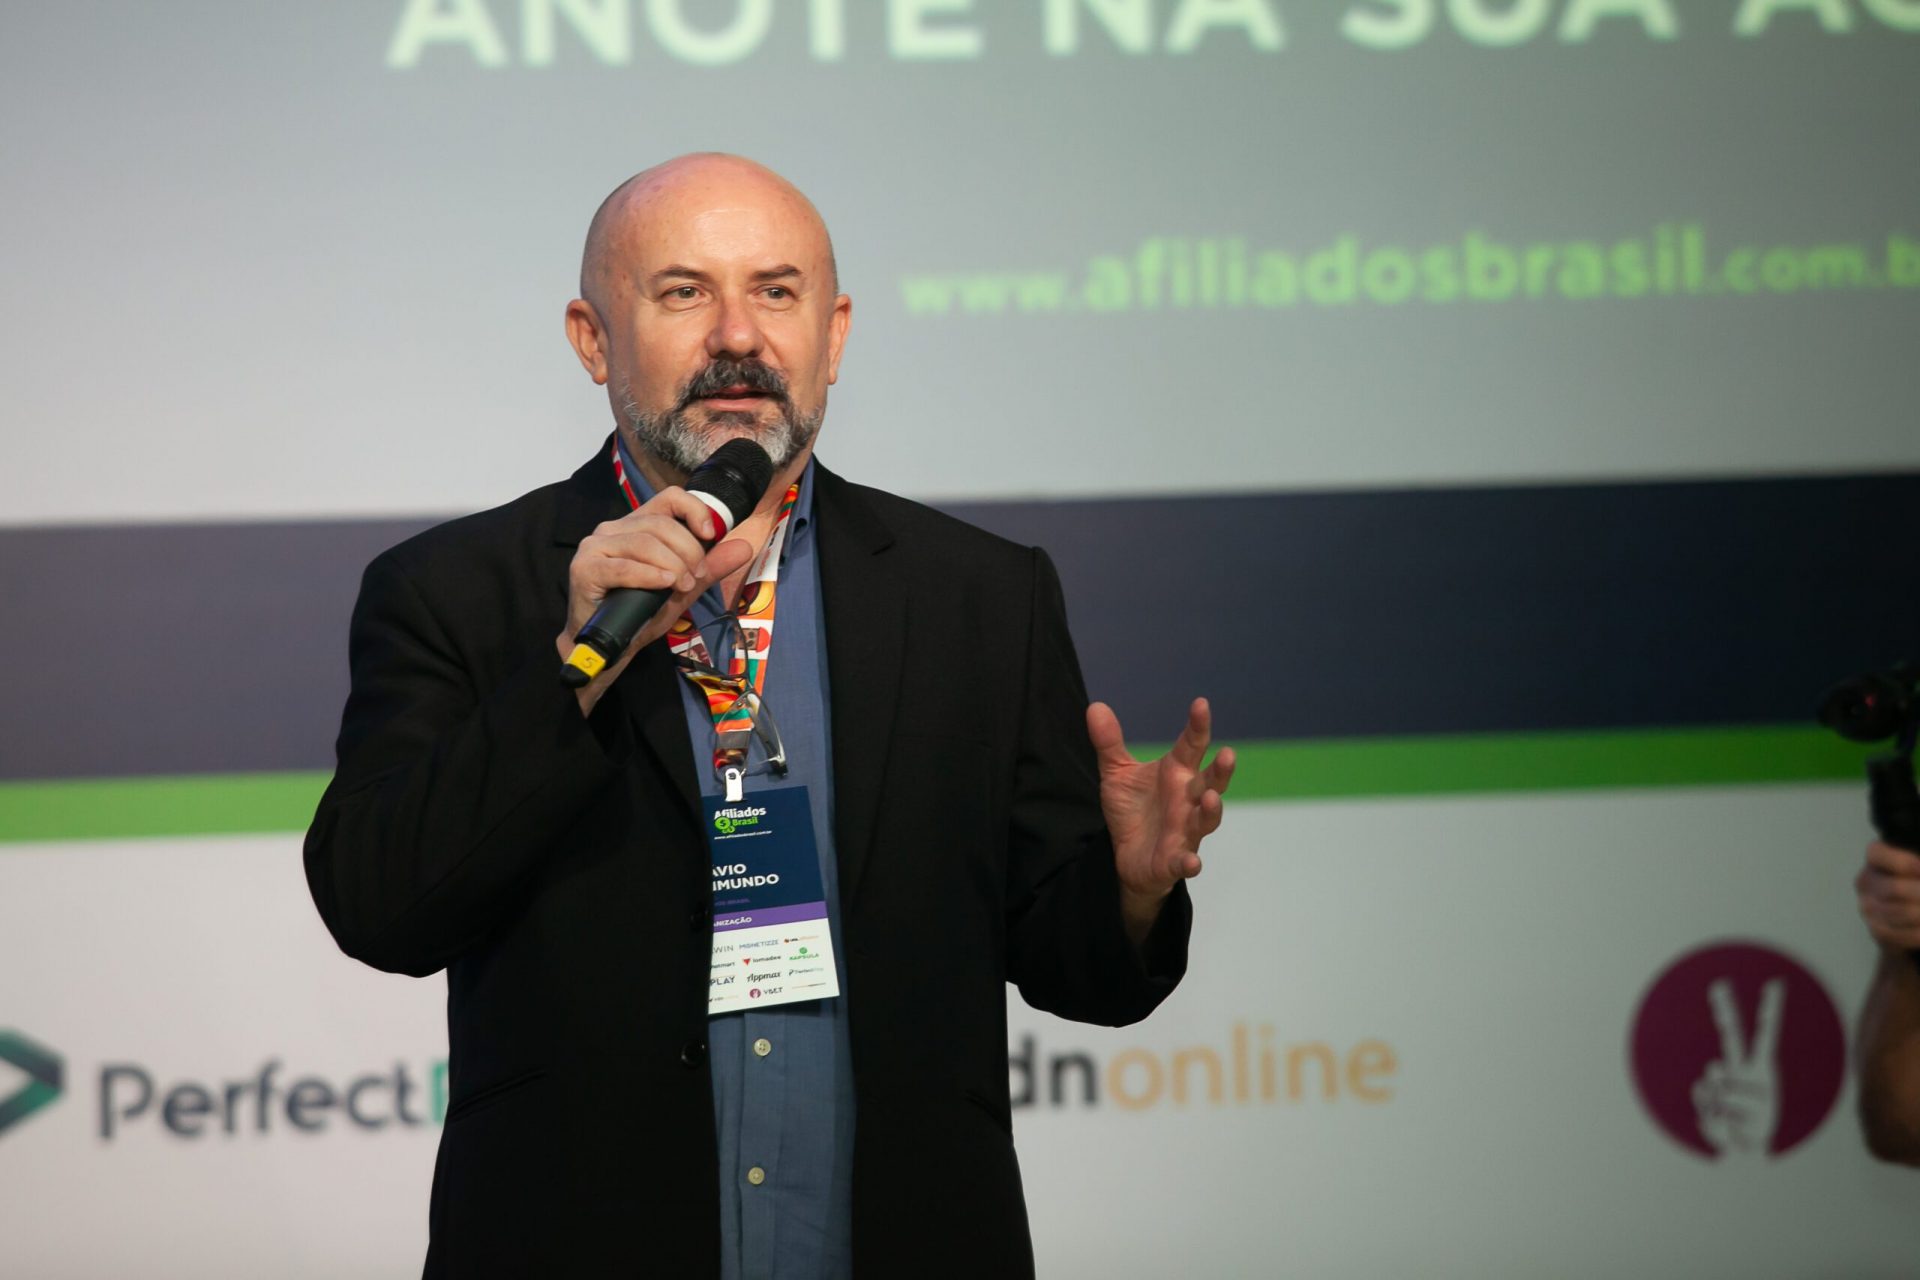 Flavio Raimundo palestrando na Afiliados Brasil 2019